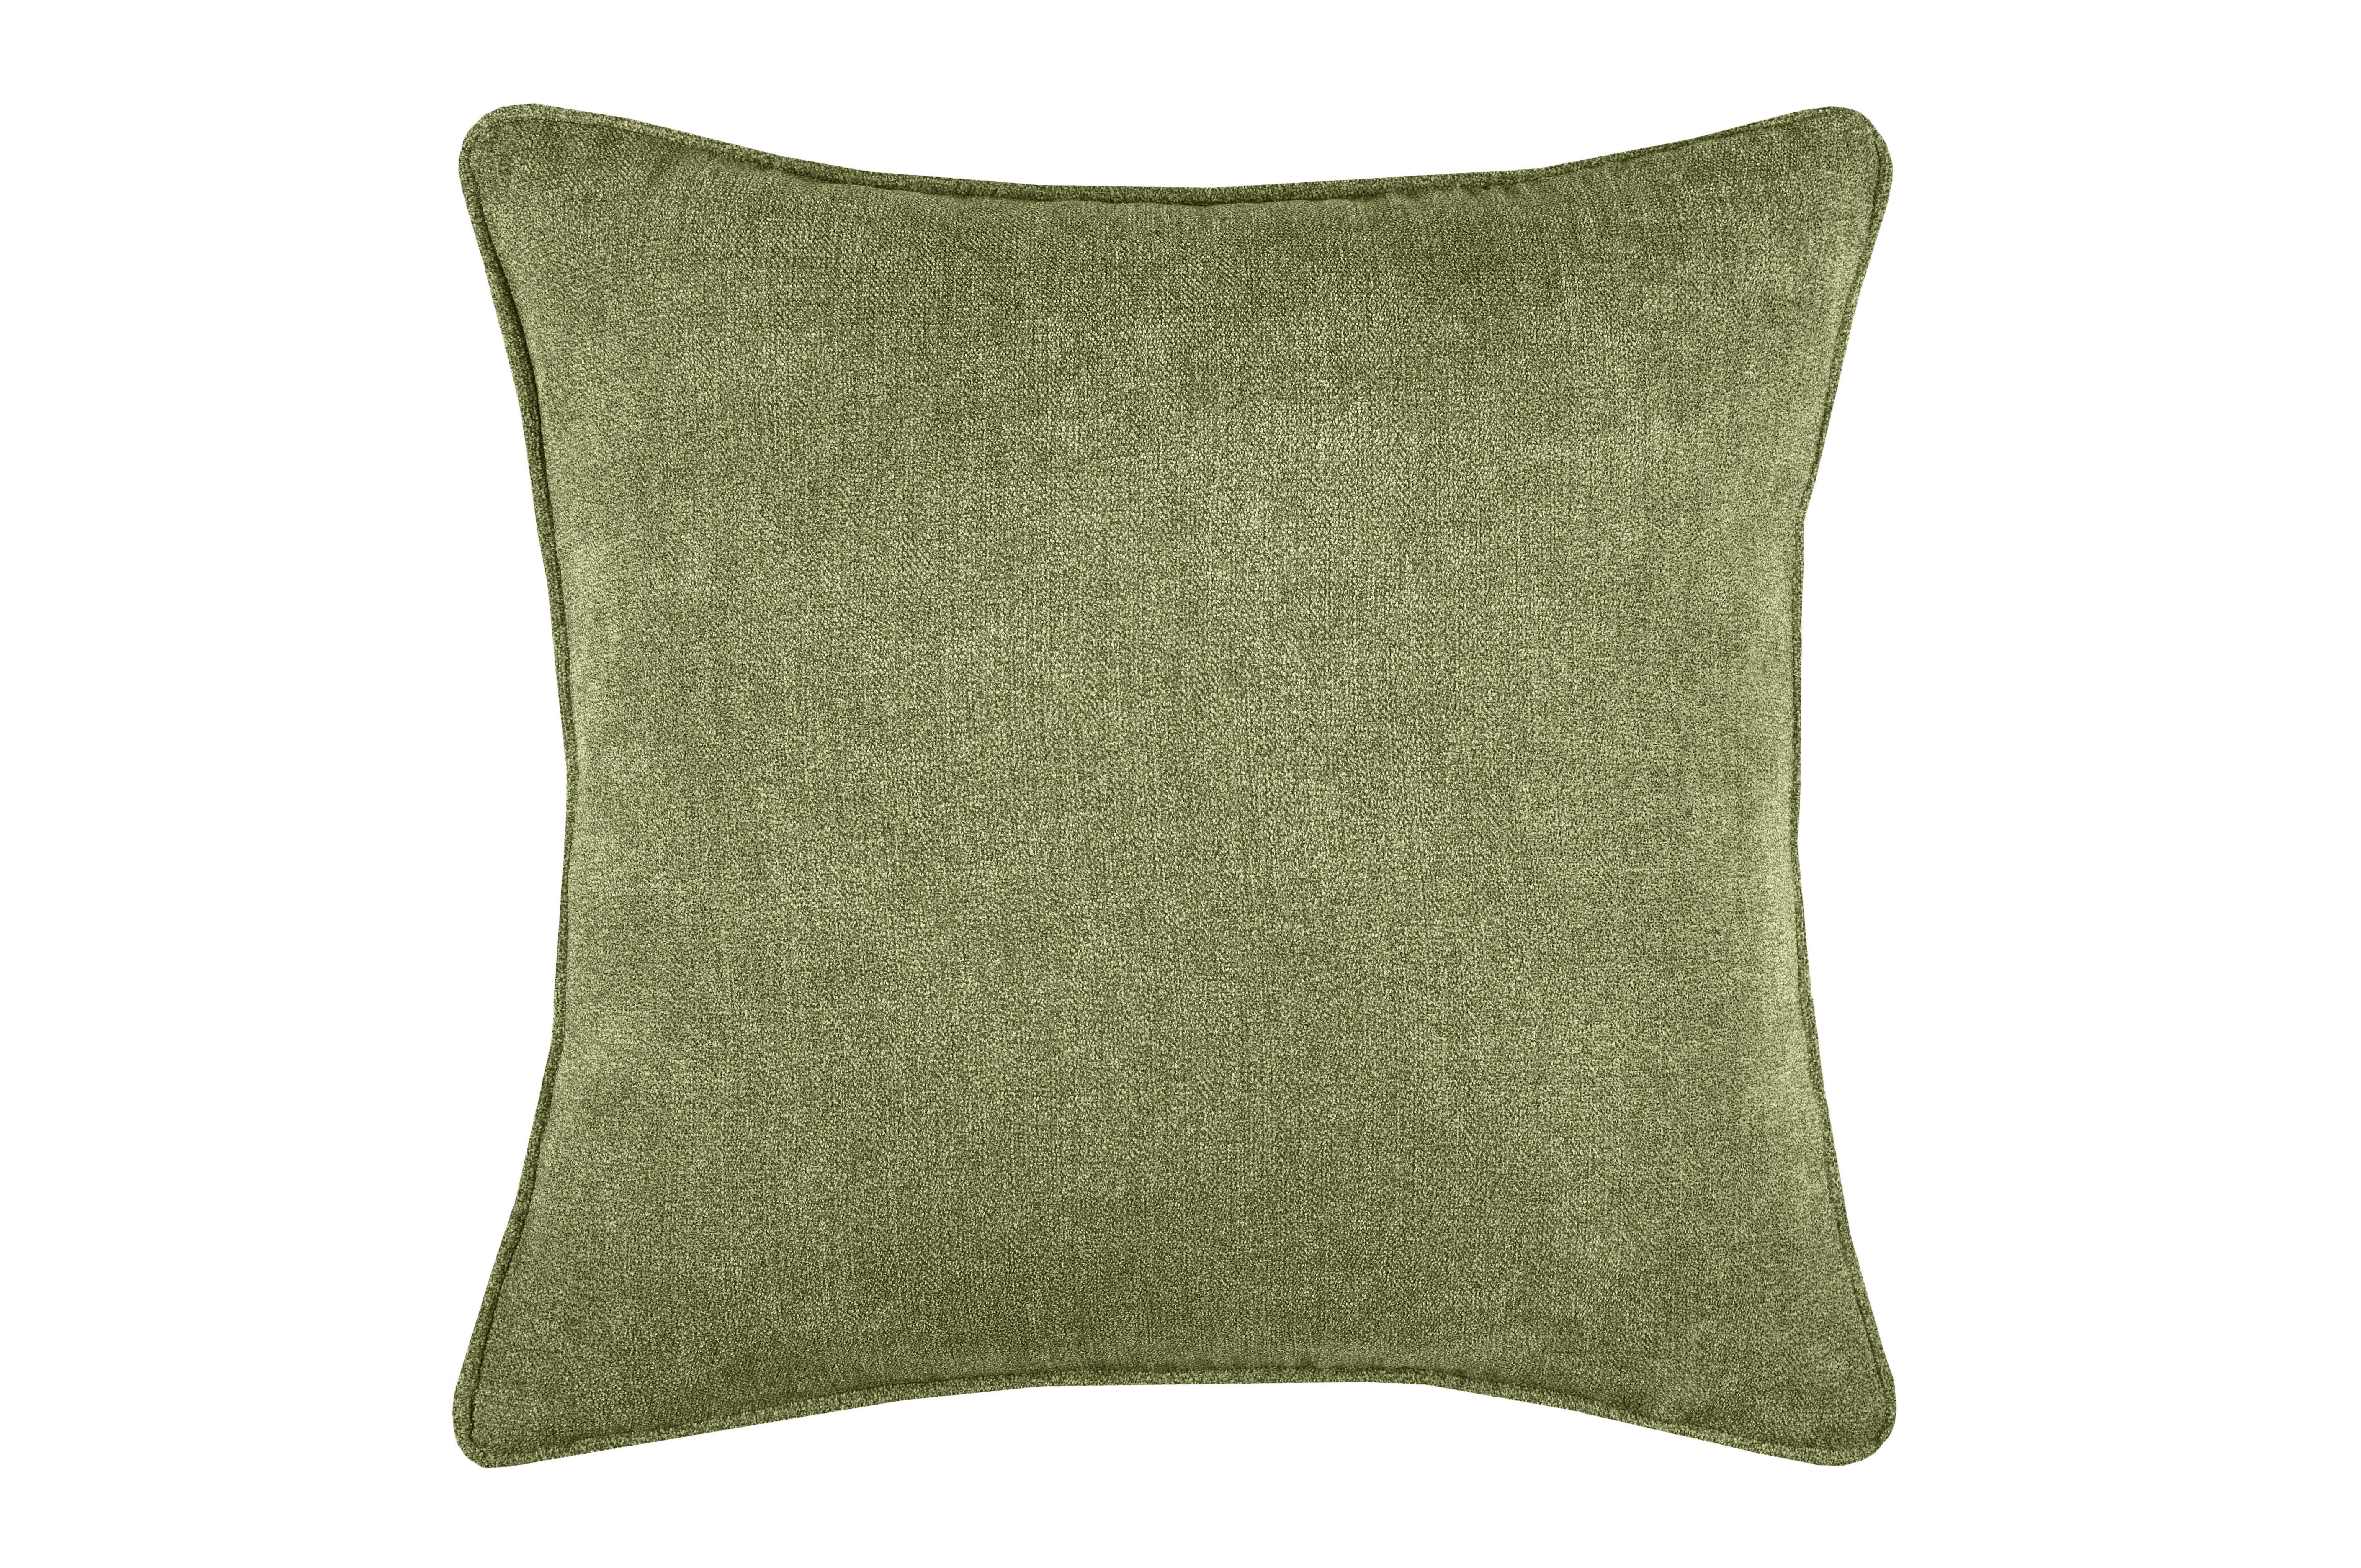 UKRASNI JASTUČIĆ   - zelena, Basics, tekstil (45/45cm)